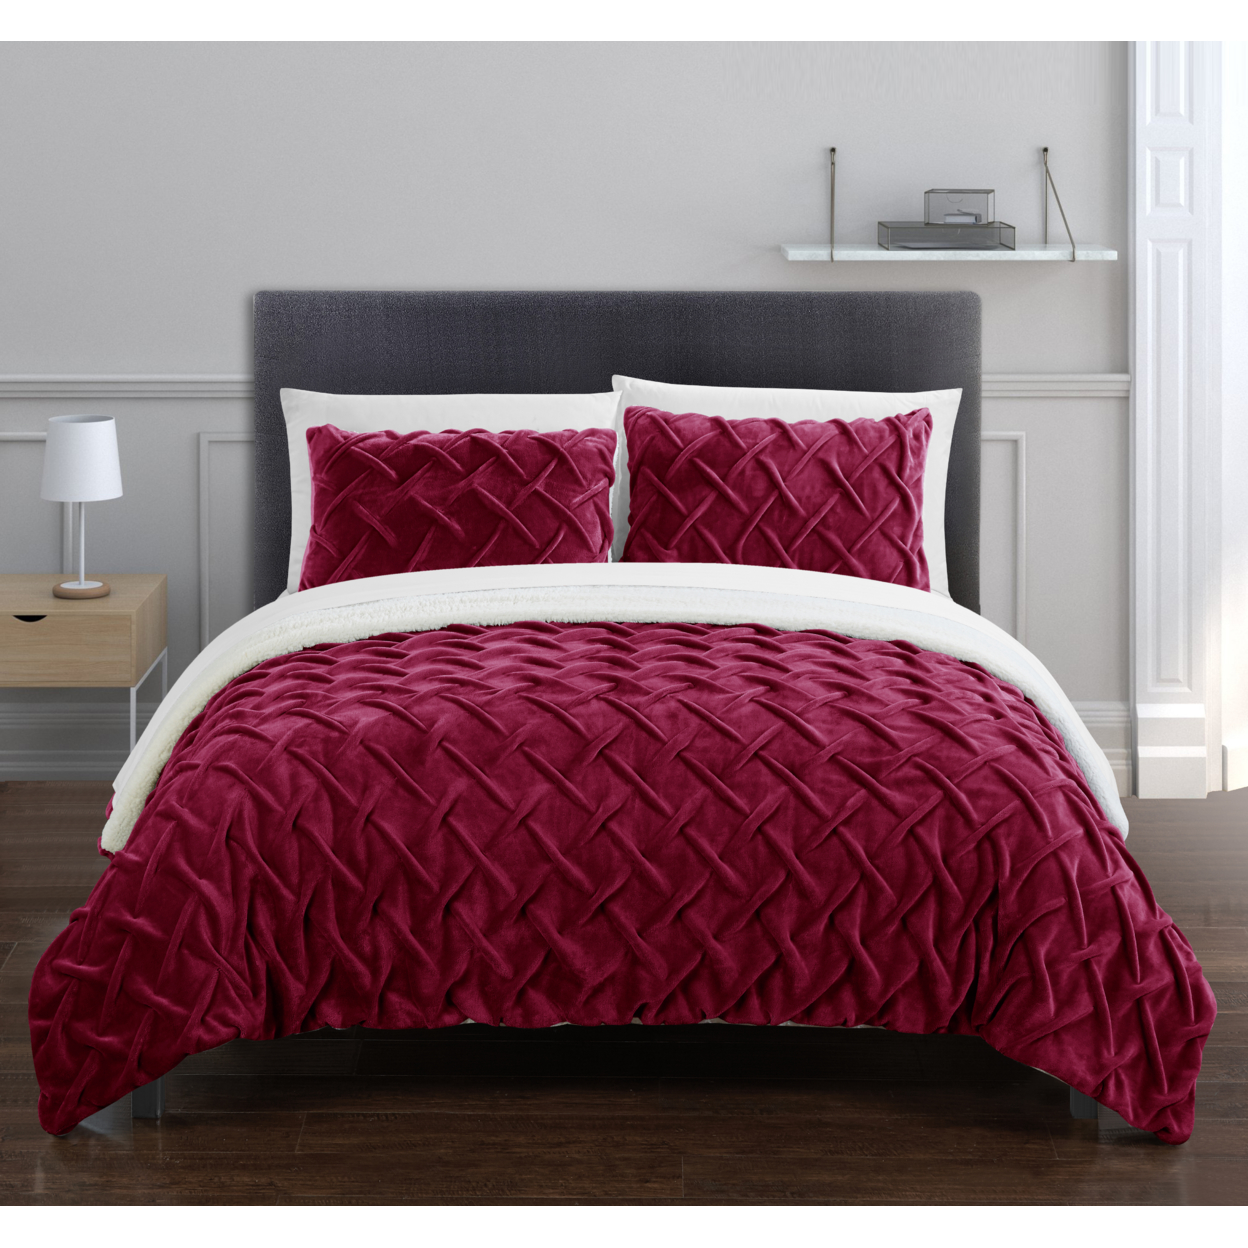 Thirsa 3 Or 2 Piece Comforter Set Ultra Plush Micro Mink Criss Cross Pinch Pleat Sherpa Lined Bedding - Beige, Twin Xl